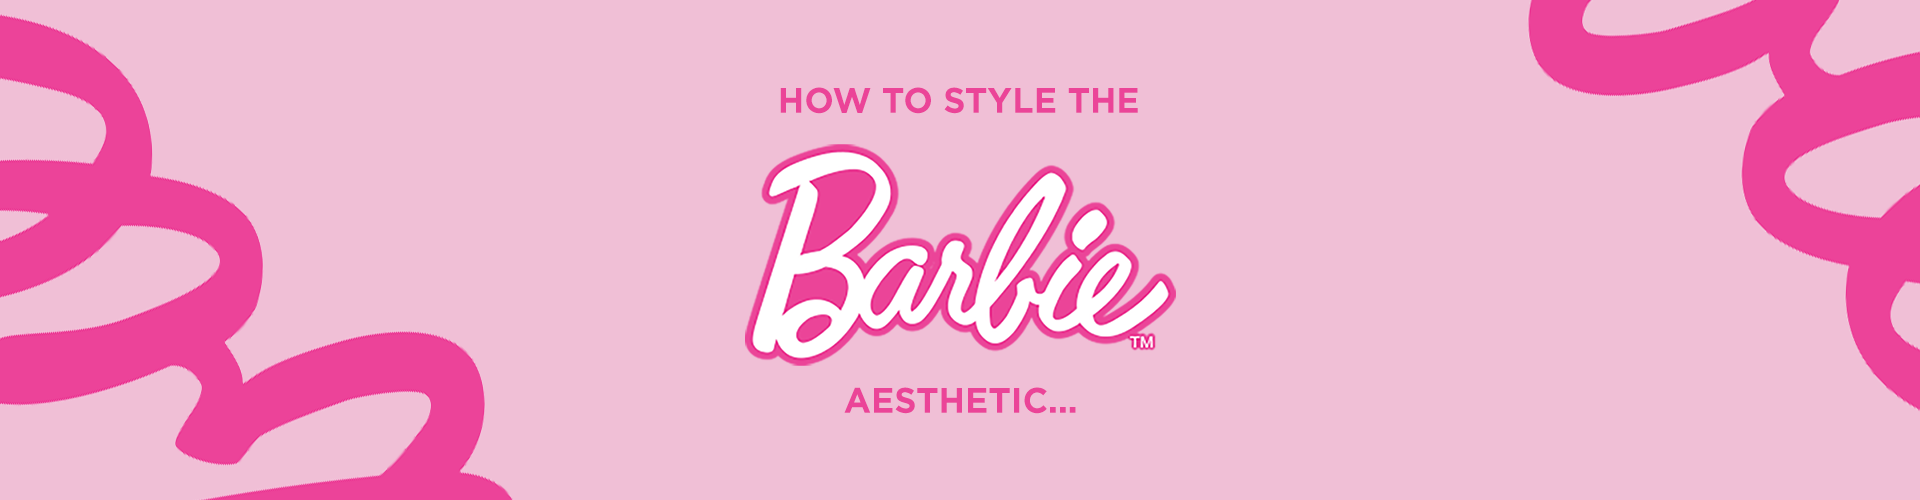 How to dress: Barbiecore